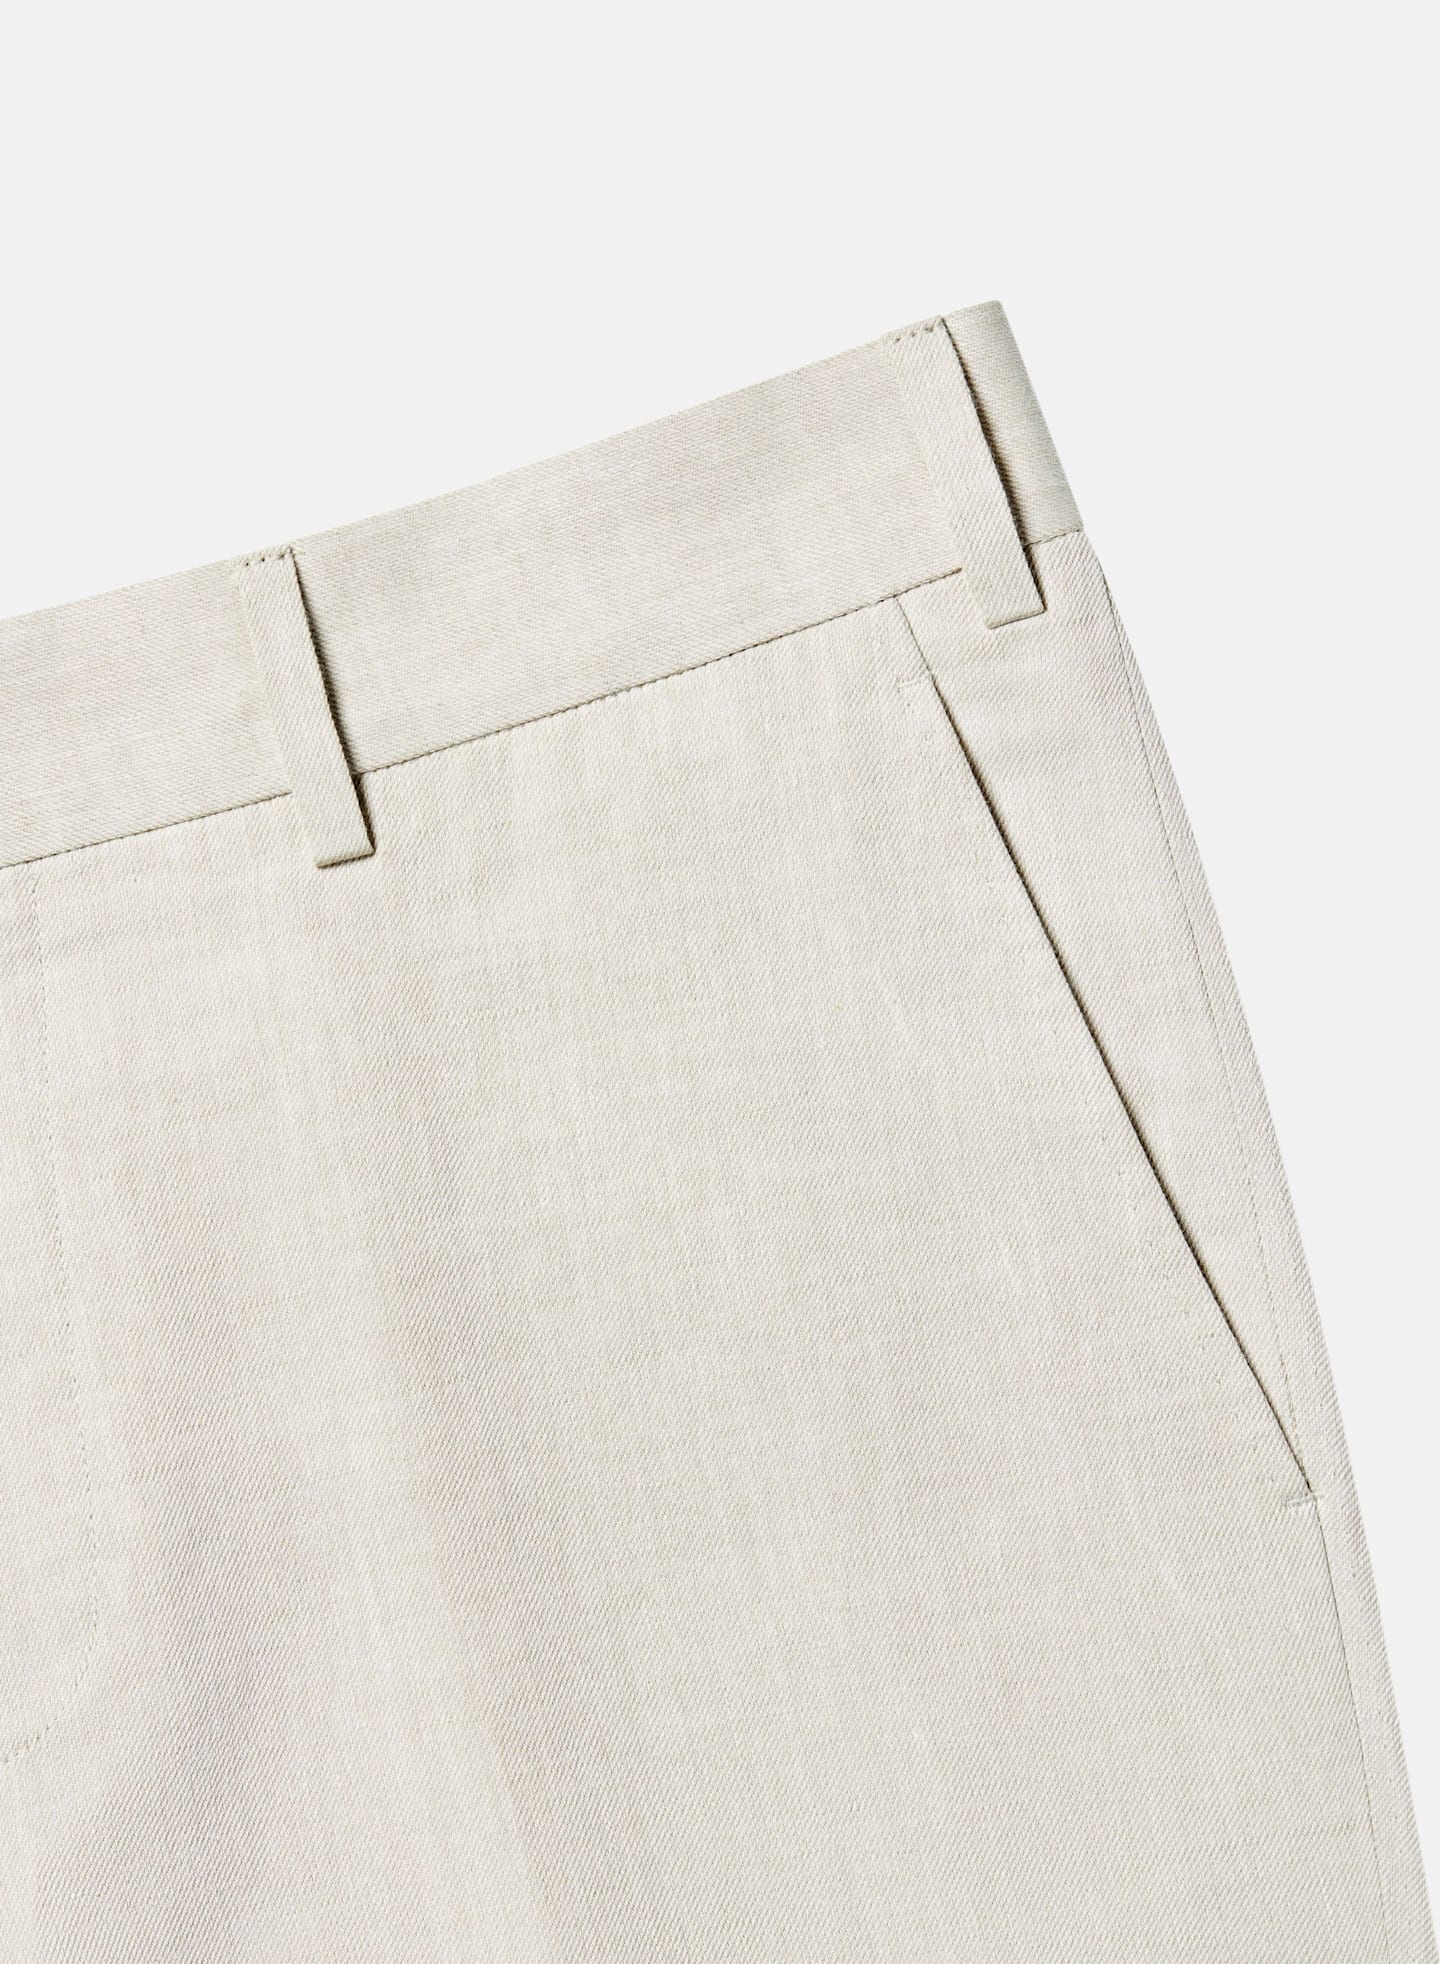 Flat front pocket on off-white linen pants.